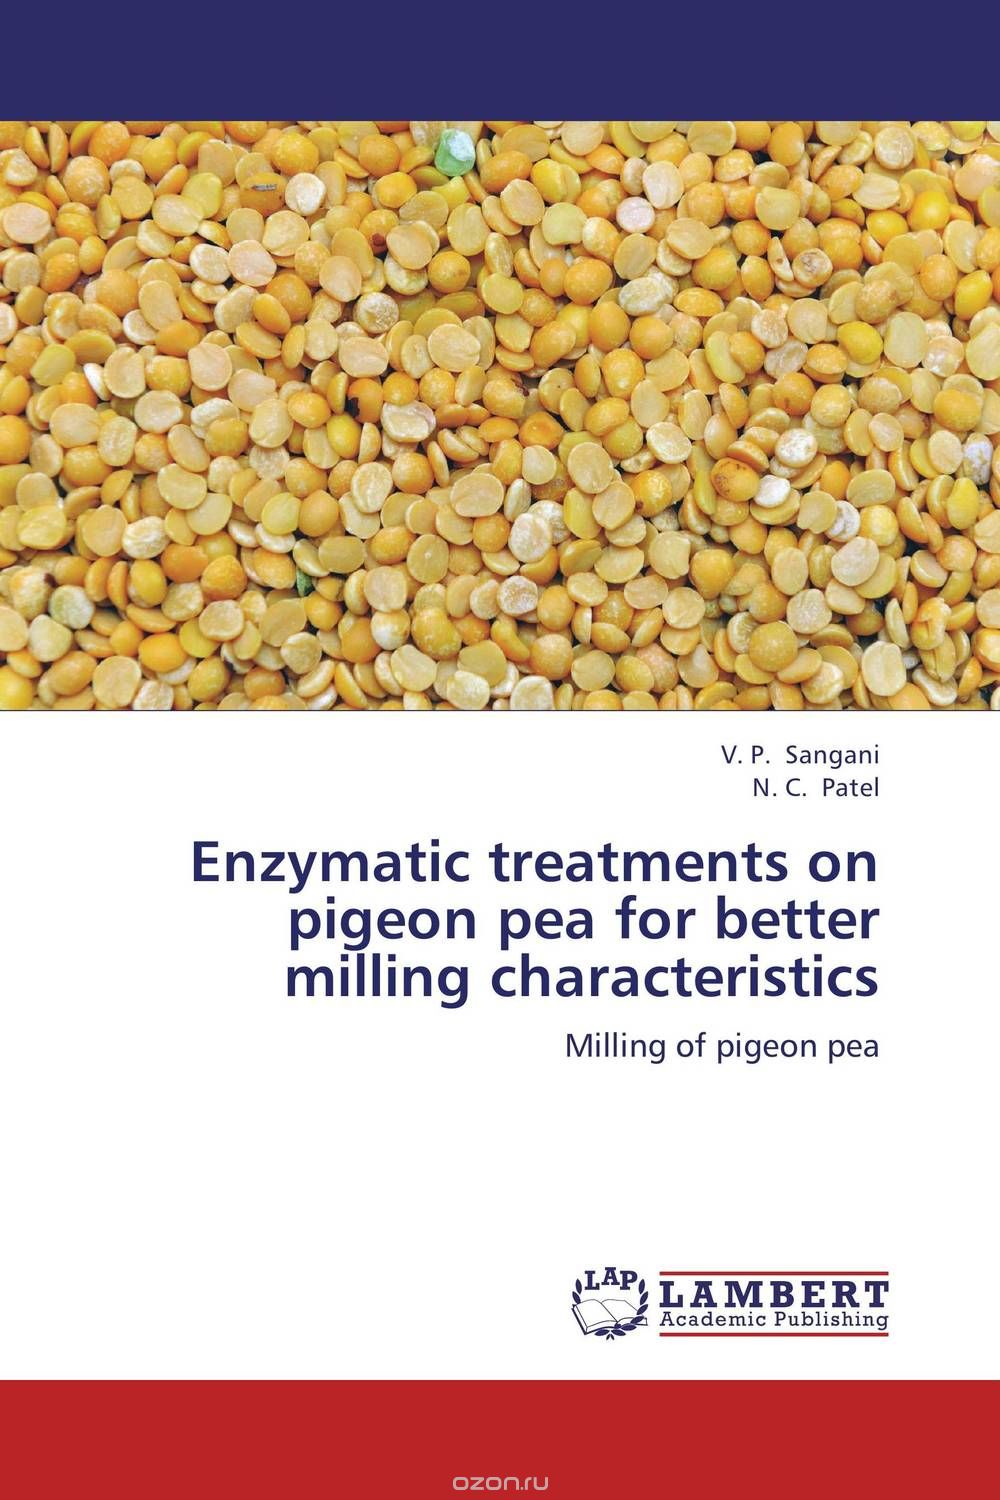 Скачать книгу "Enzymatic treatments on pigeon pea for better milling characteristics"